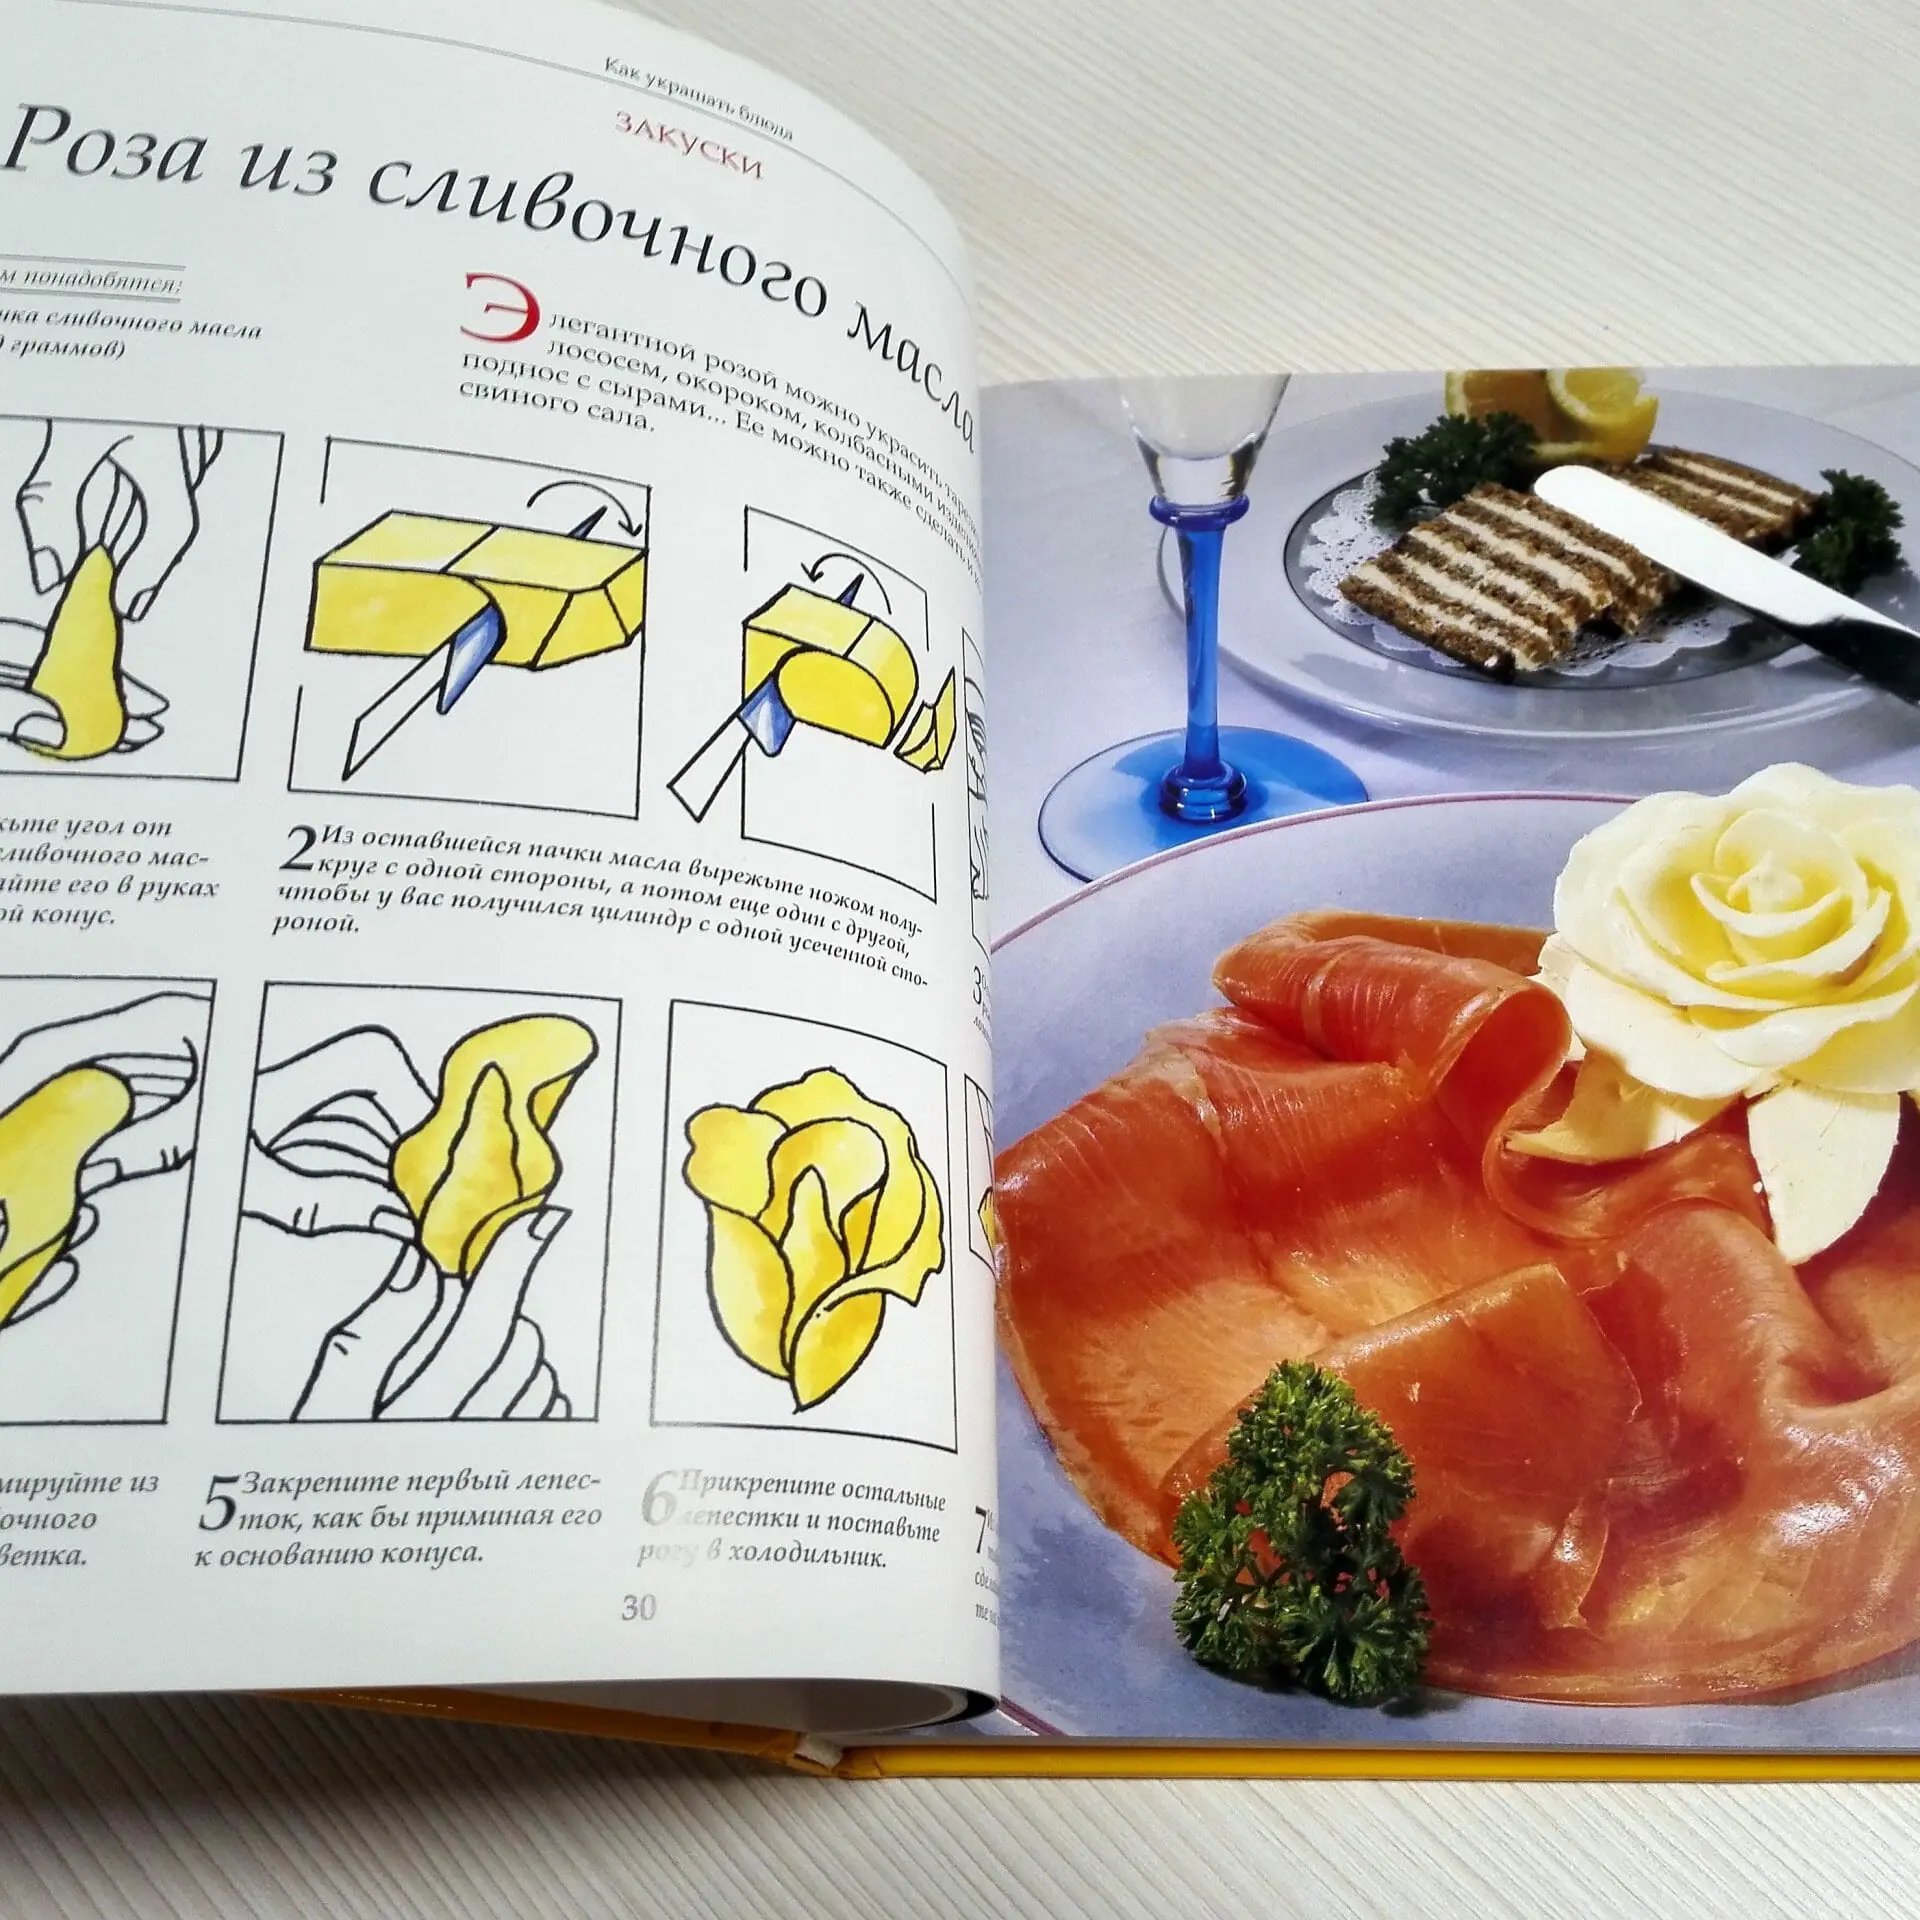 soviet cookbook.jpg